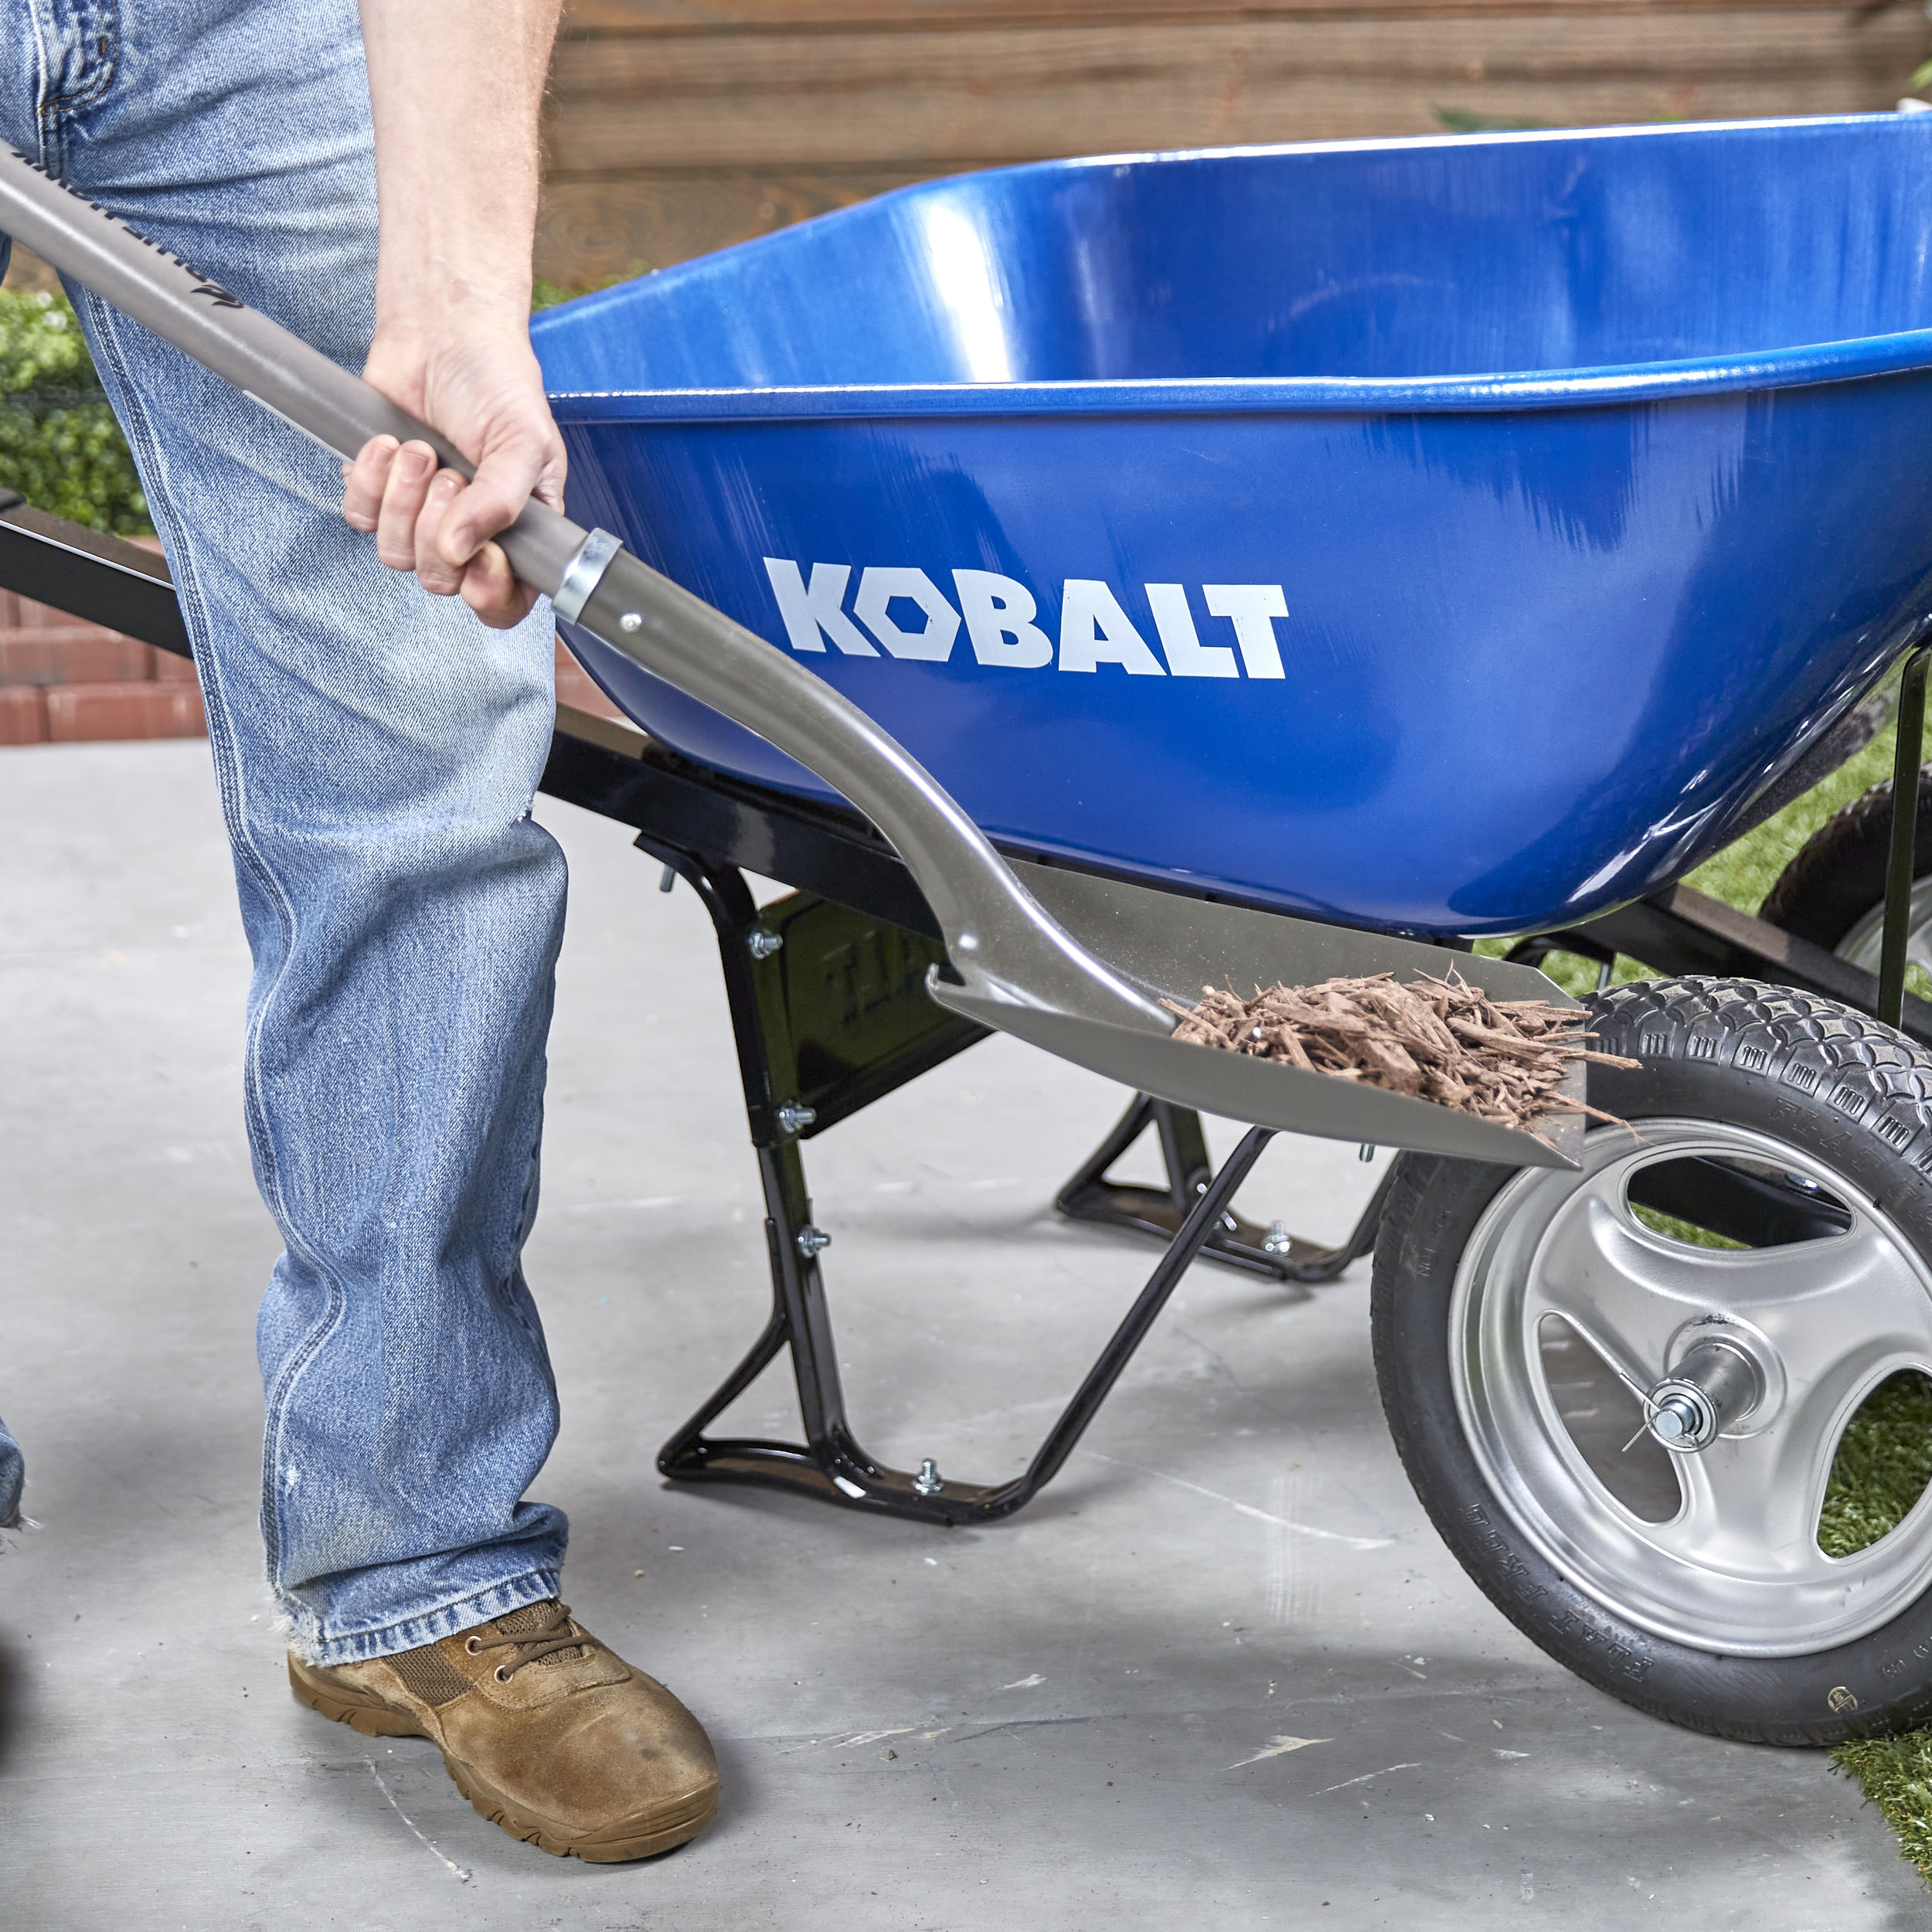 Kobalt 7-cu ft Steel Wheelbarrow with Flat-Free Tire